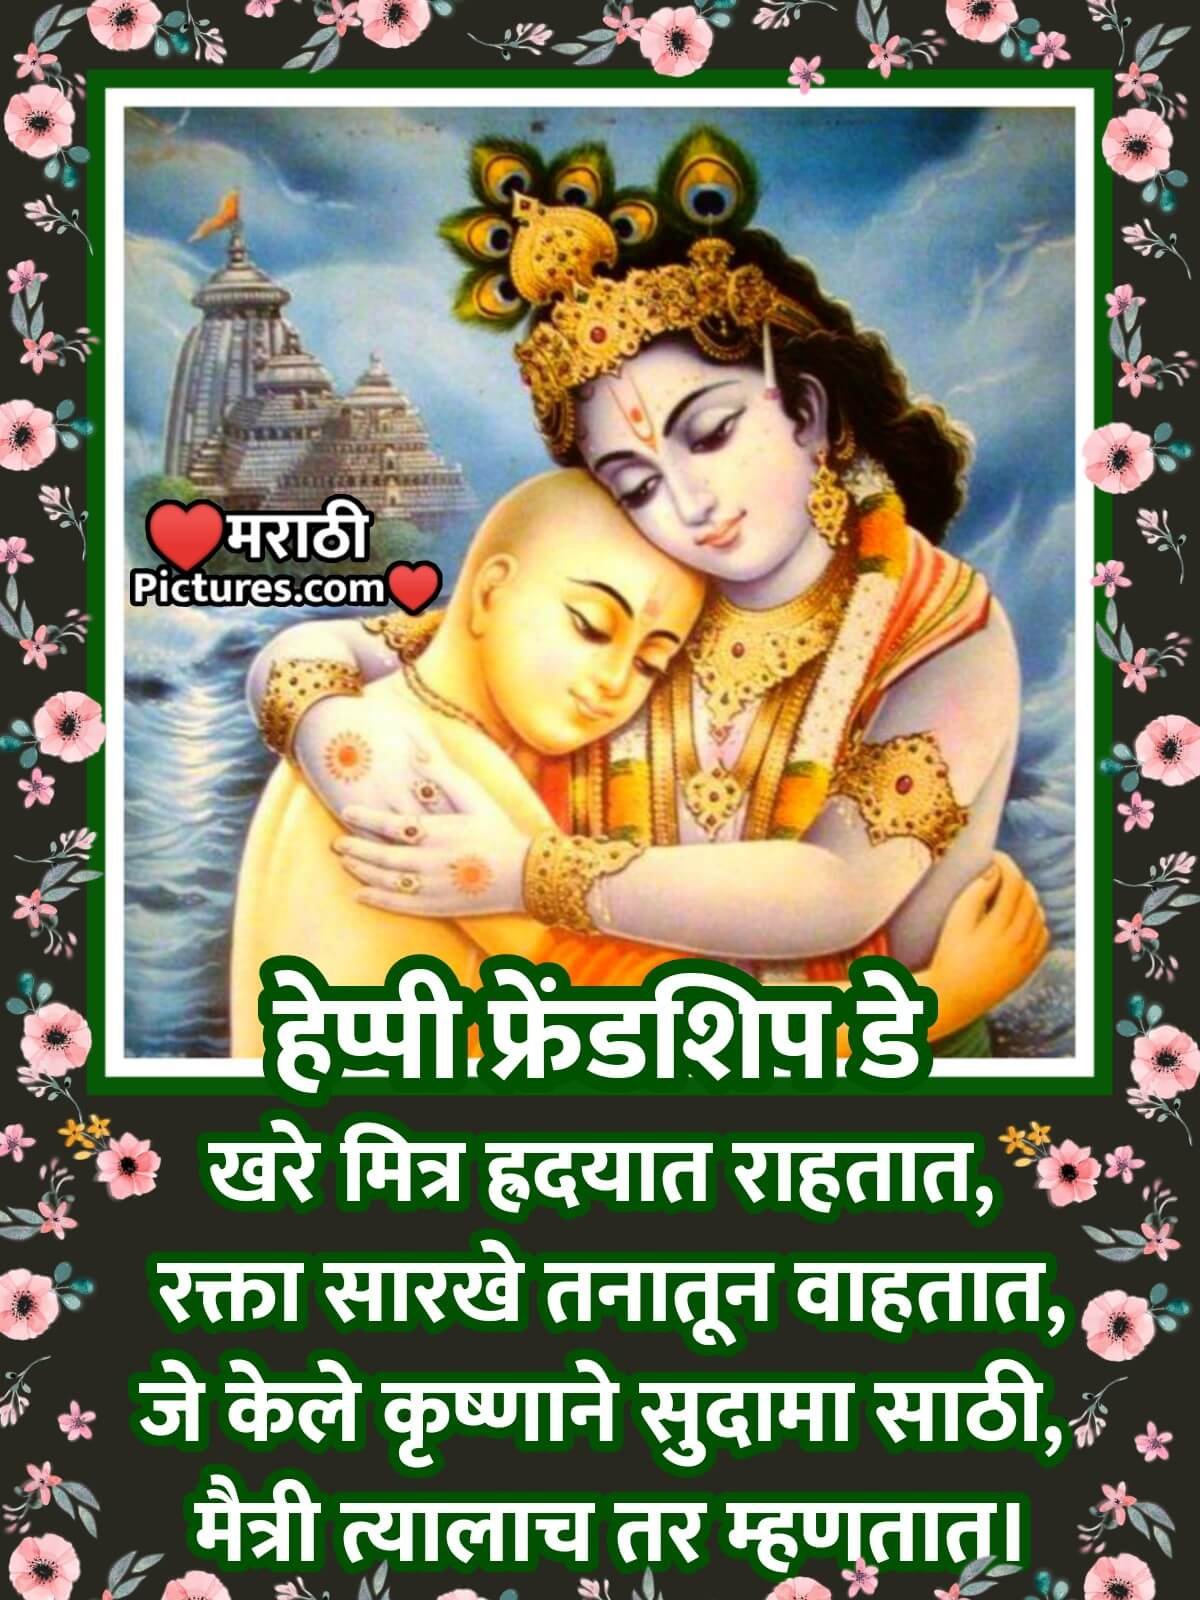 Happy Friendship Day Krishna Sudama Marathi Message